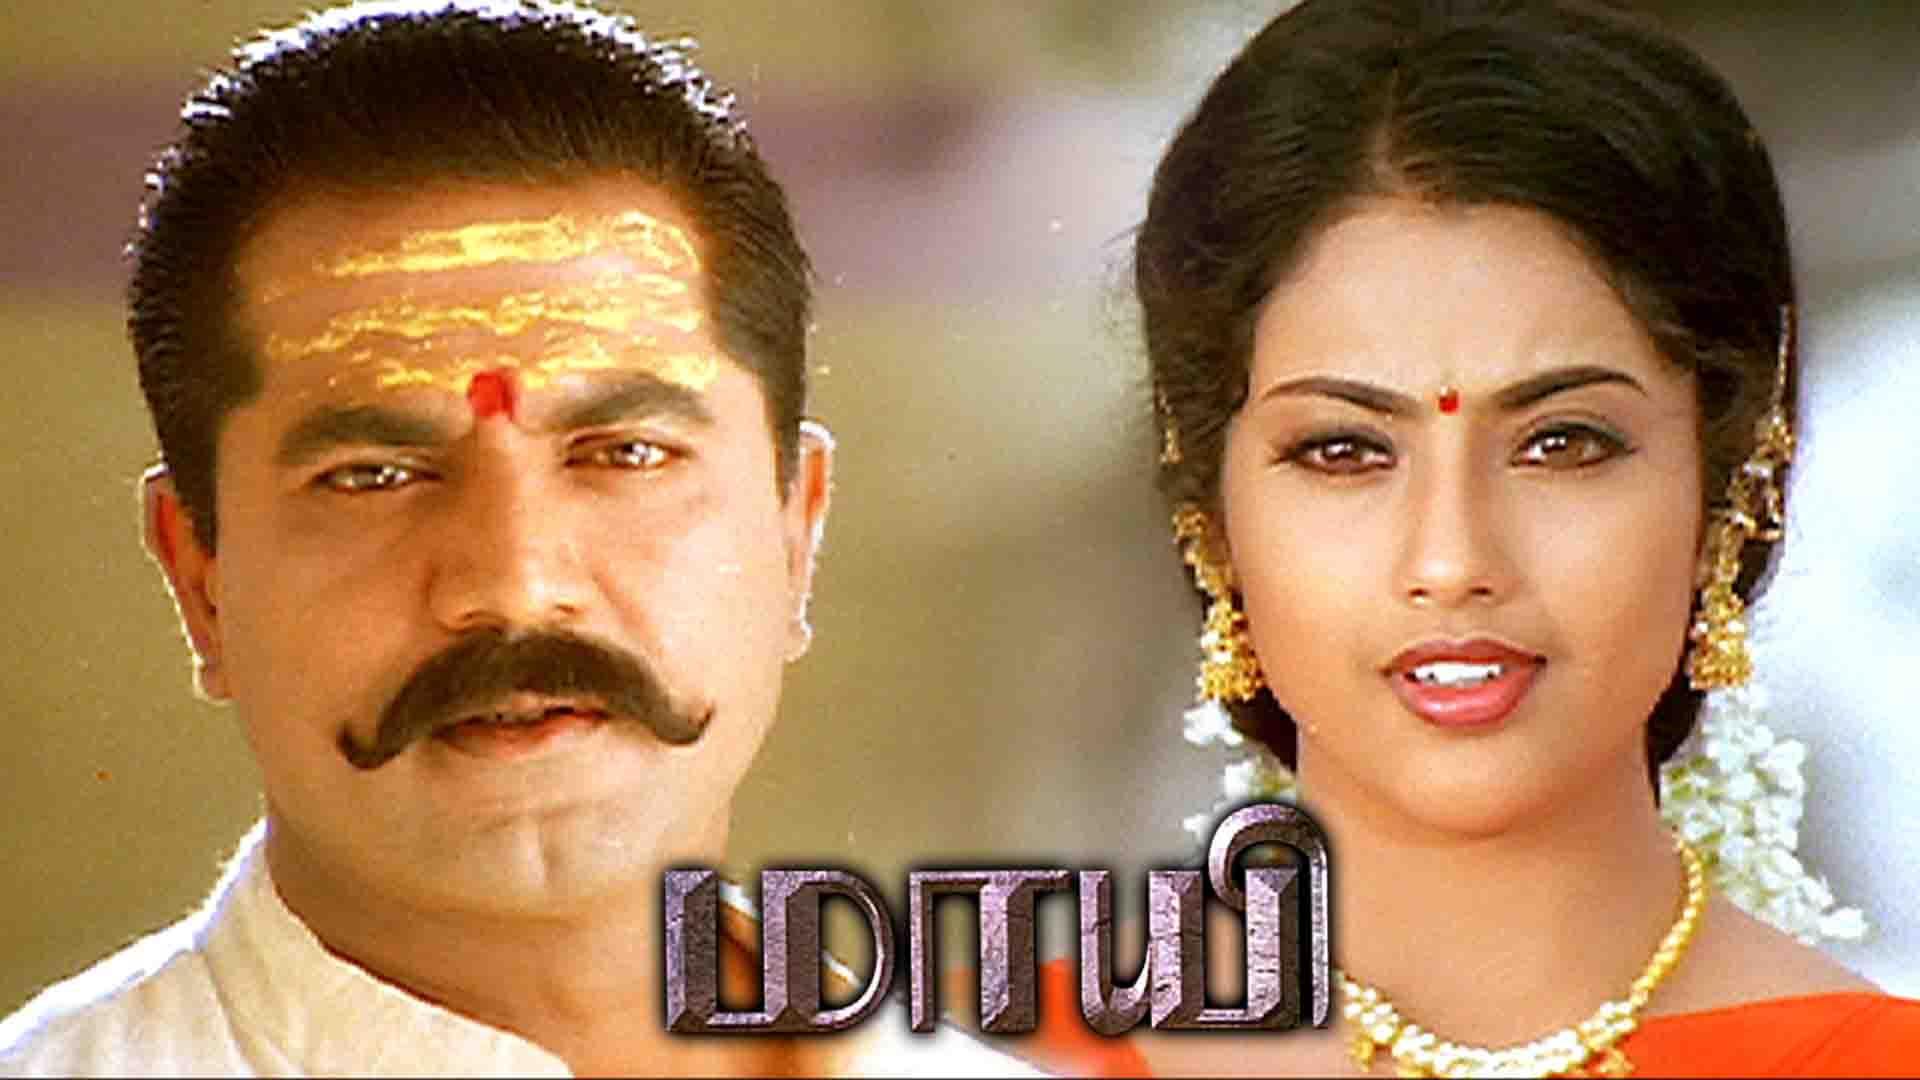 suryavamsam tamil movie online